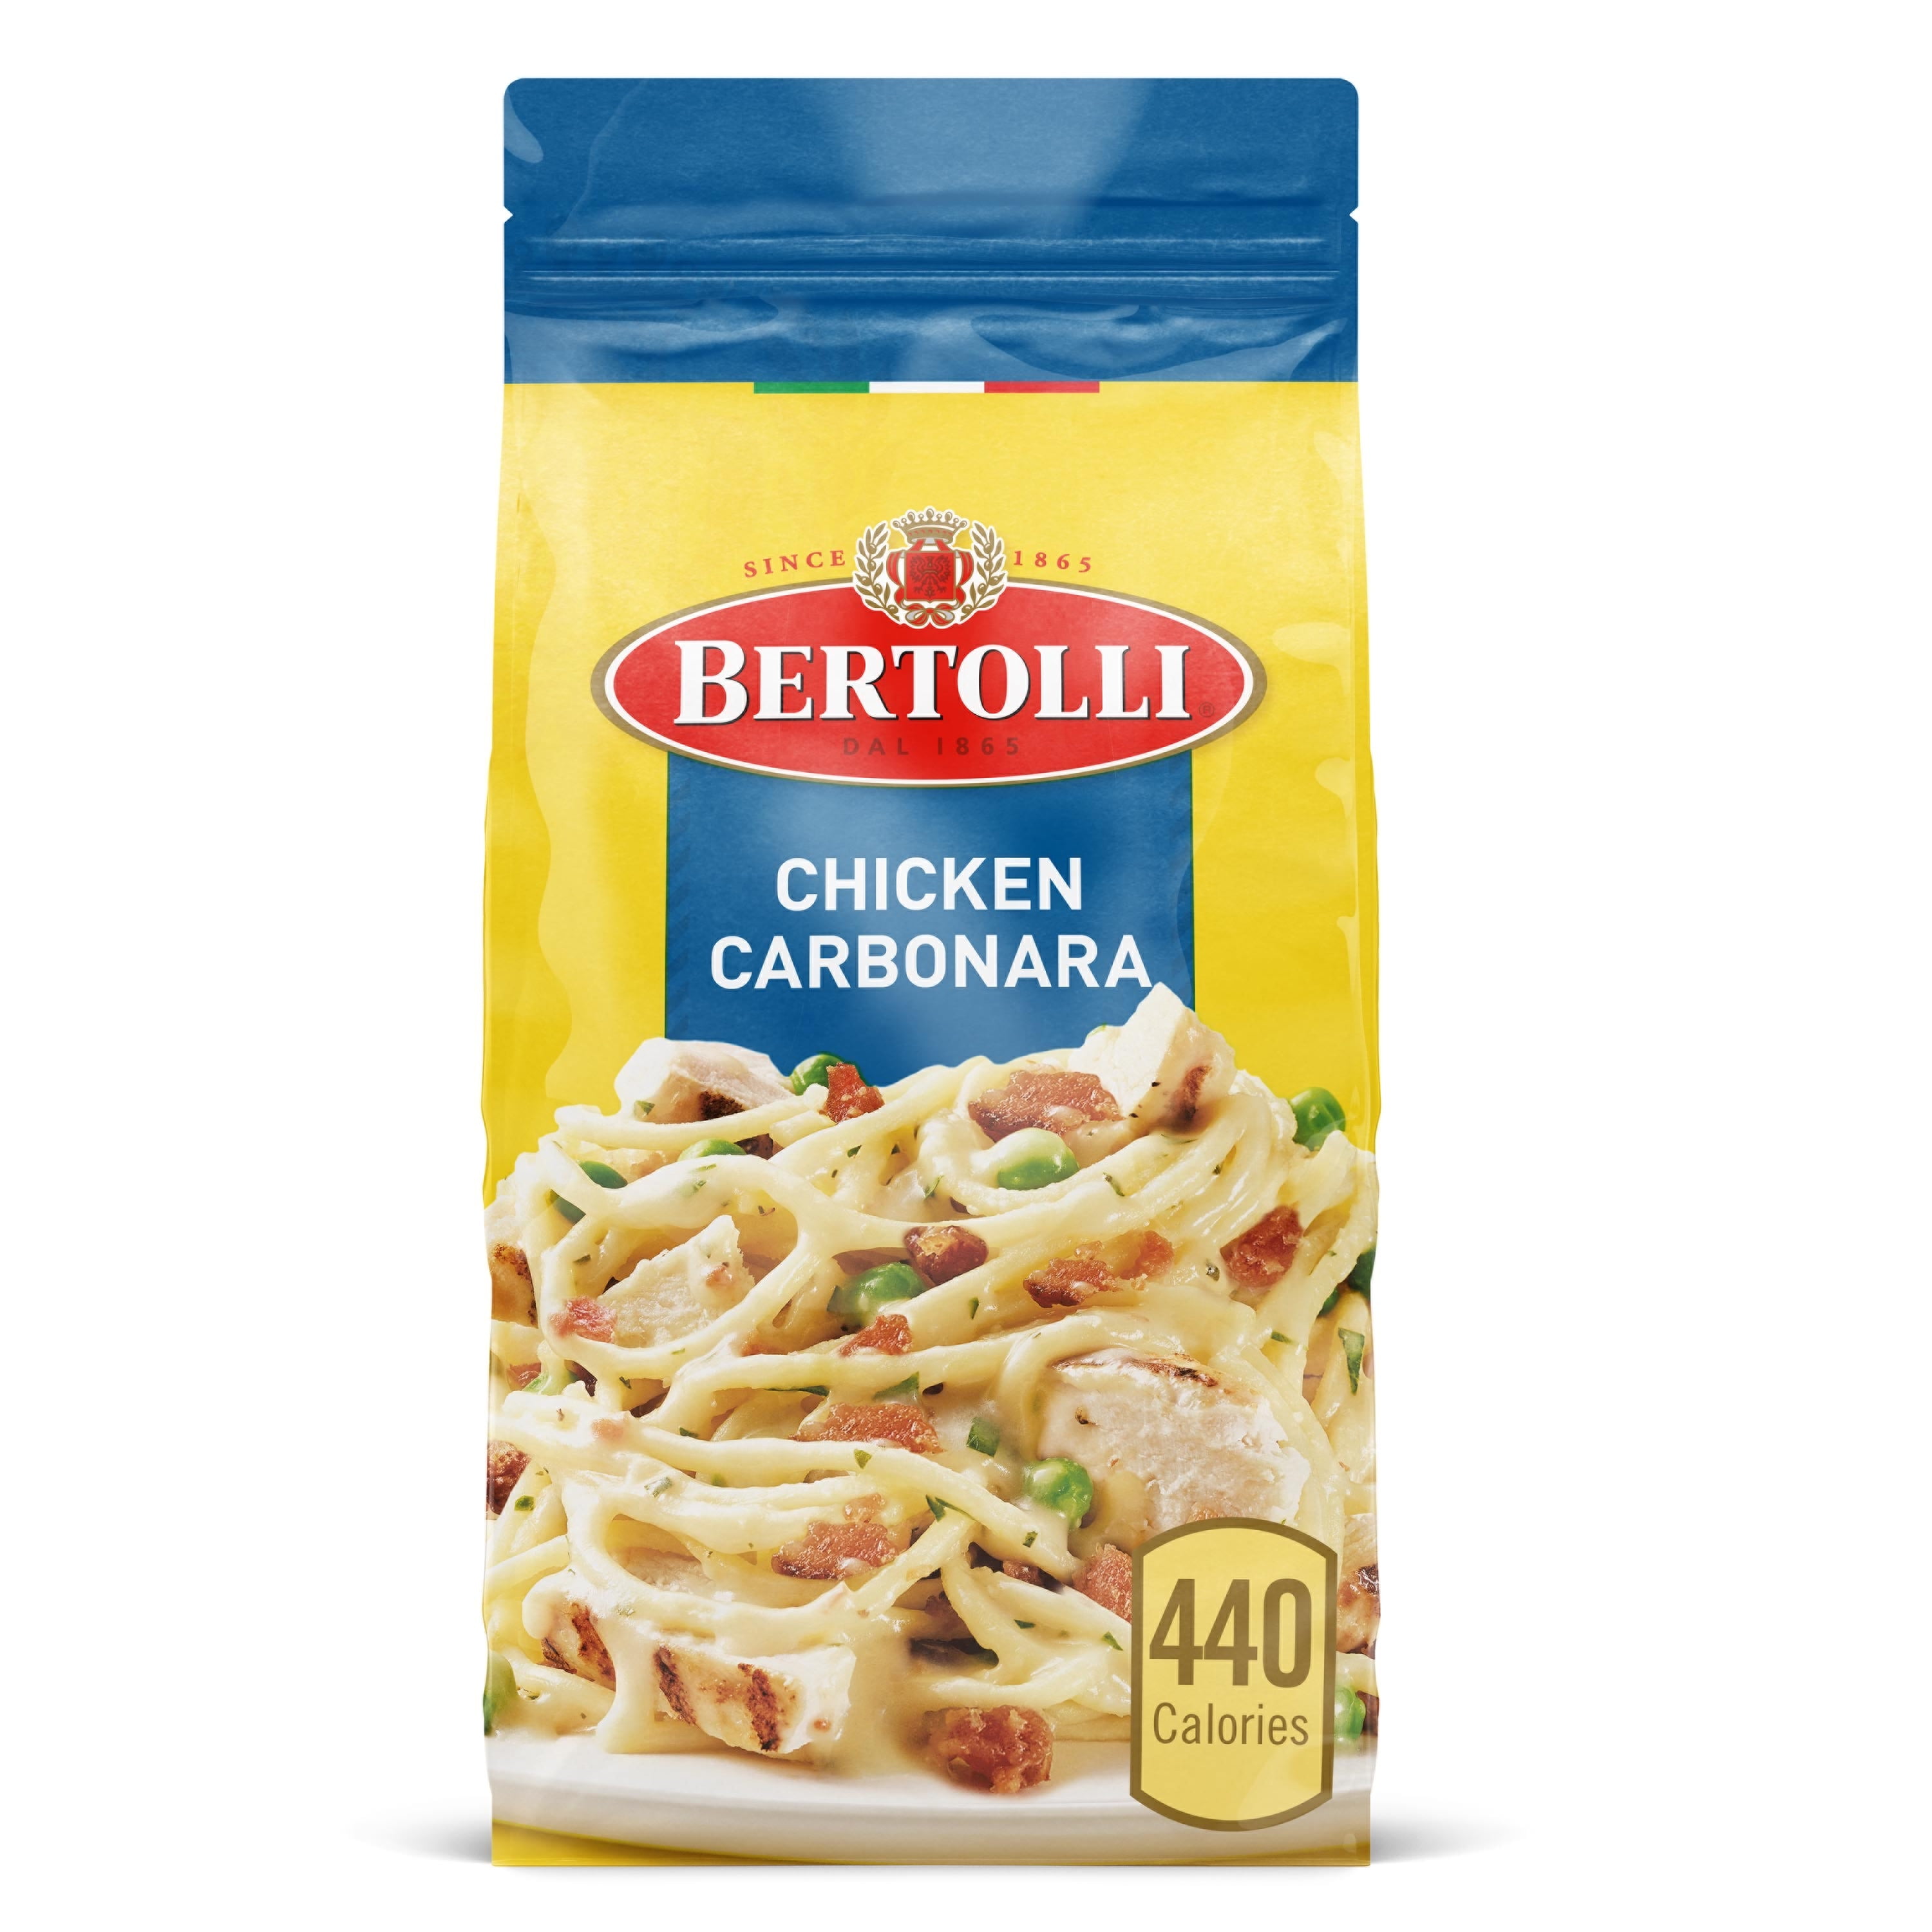 Bertolli Chicken Carbonara Frozen Meals With Spaghetti, Peas and Bacon